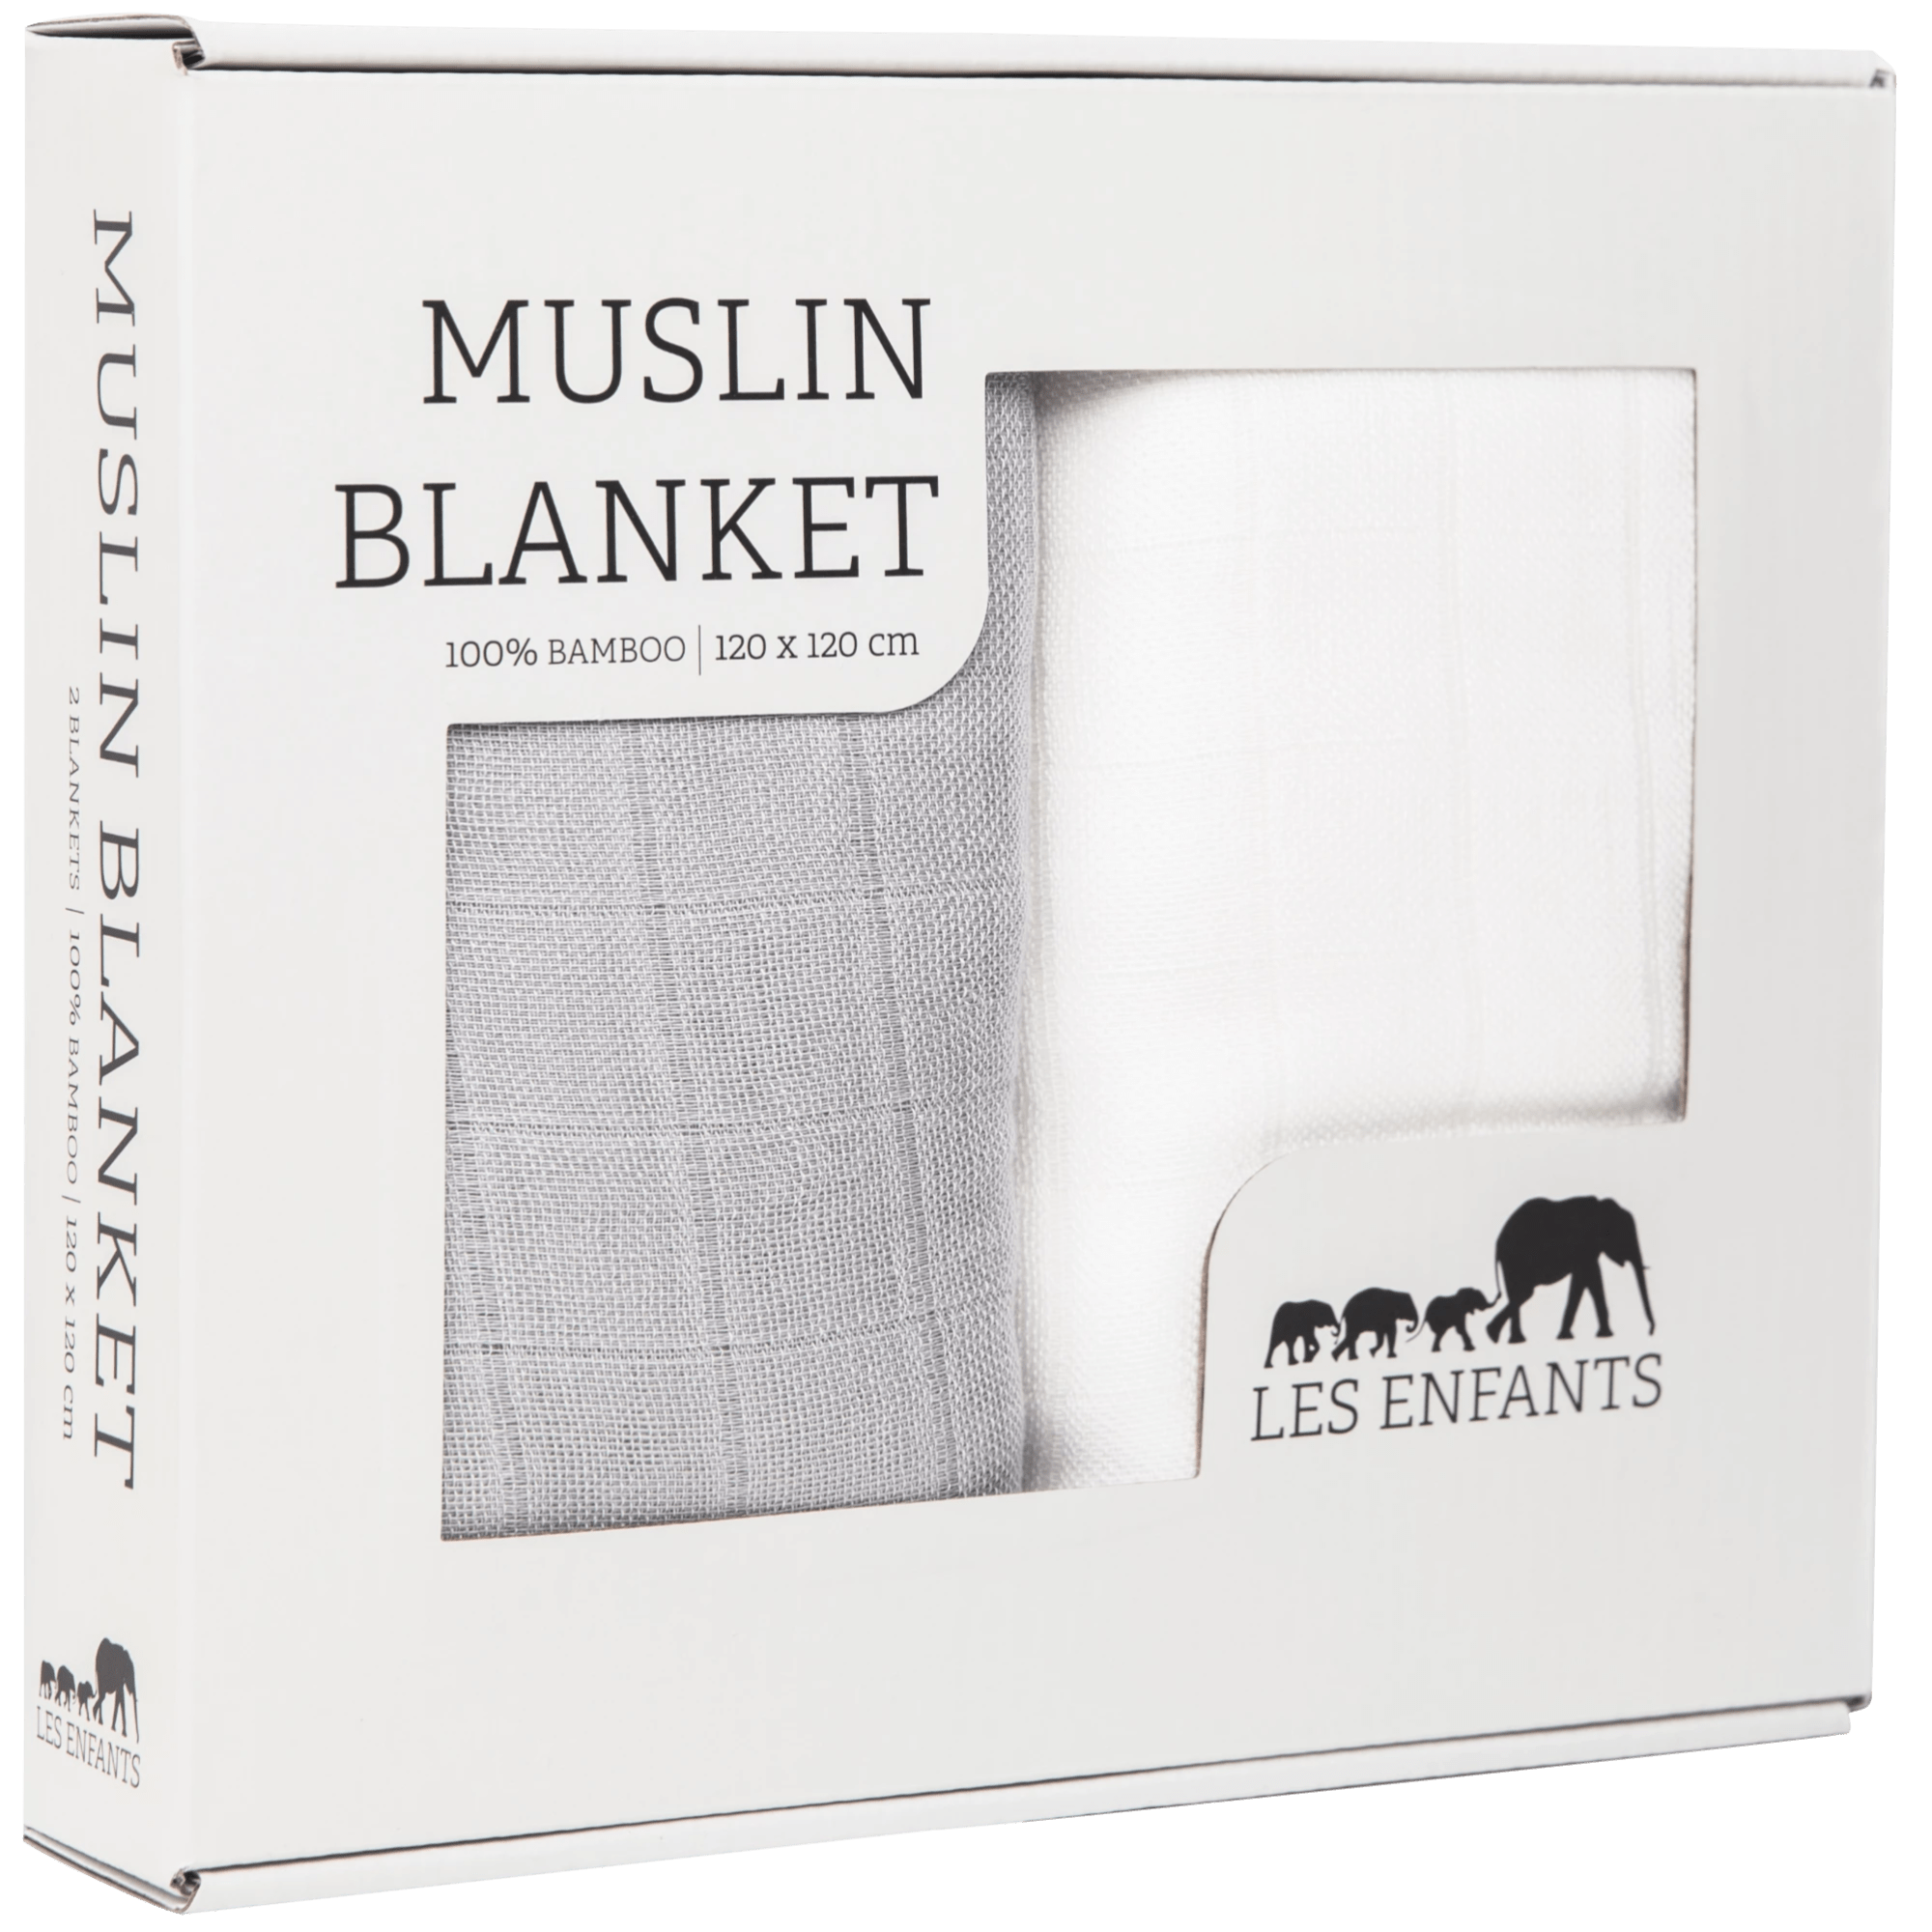 Les Enfants pack of Muslin blankets, 1 white & 1 grey